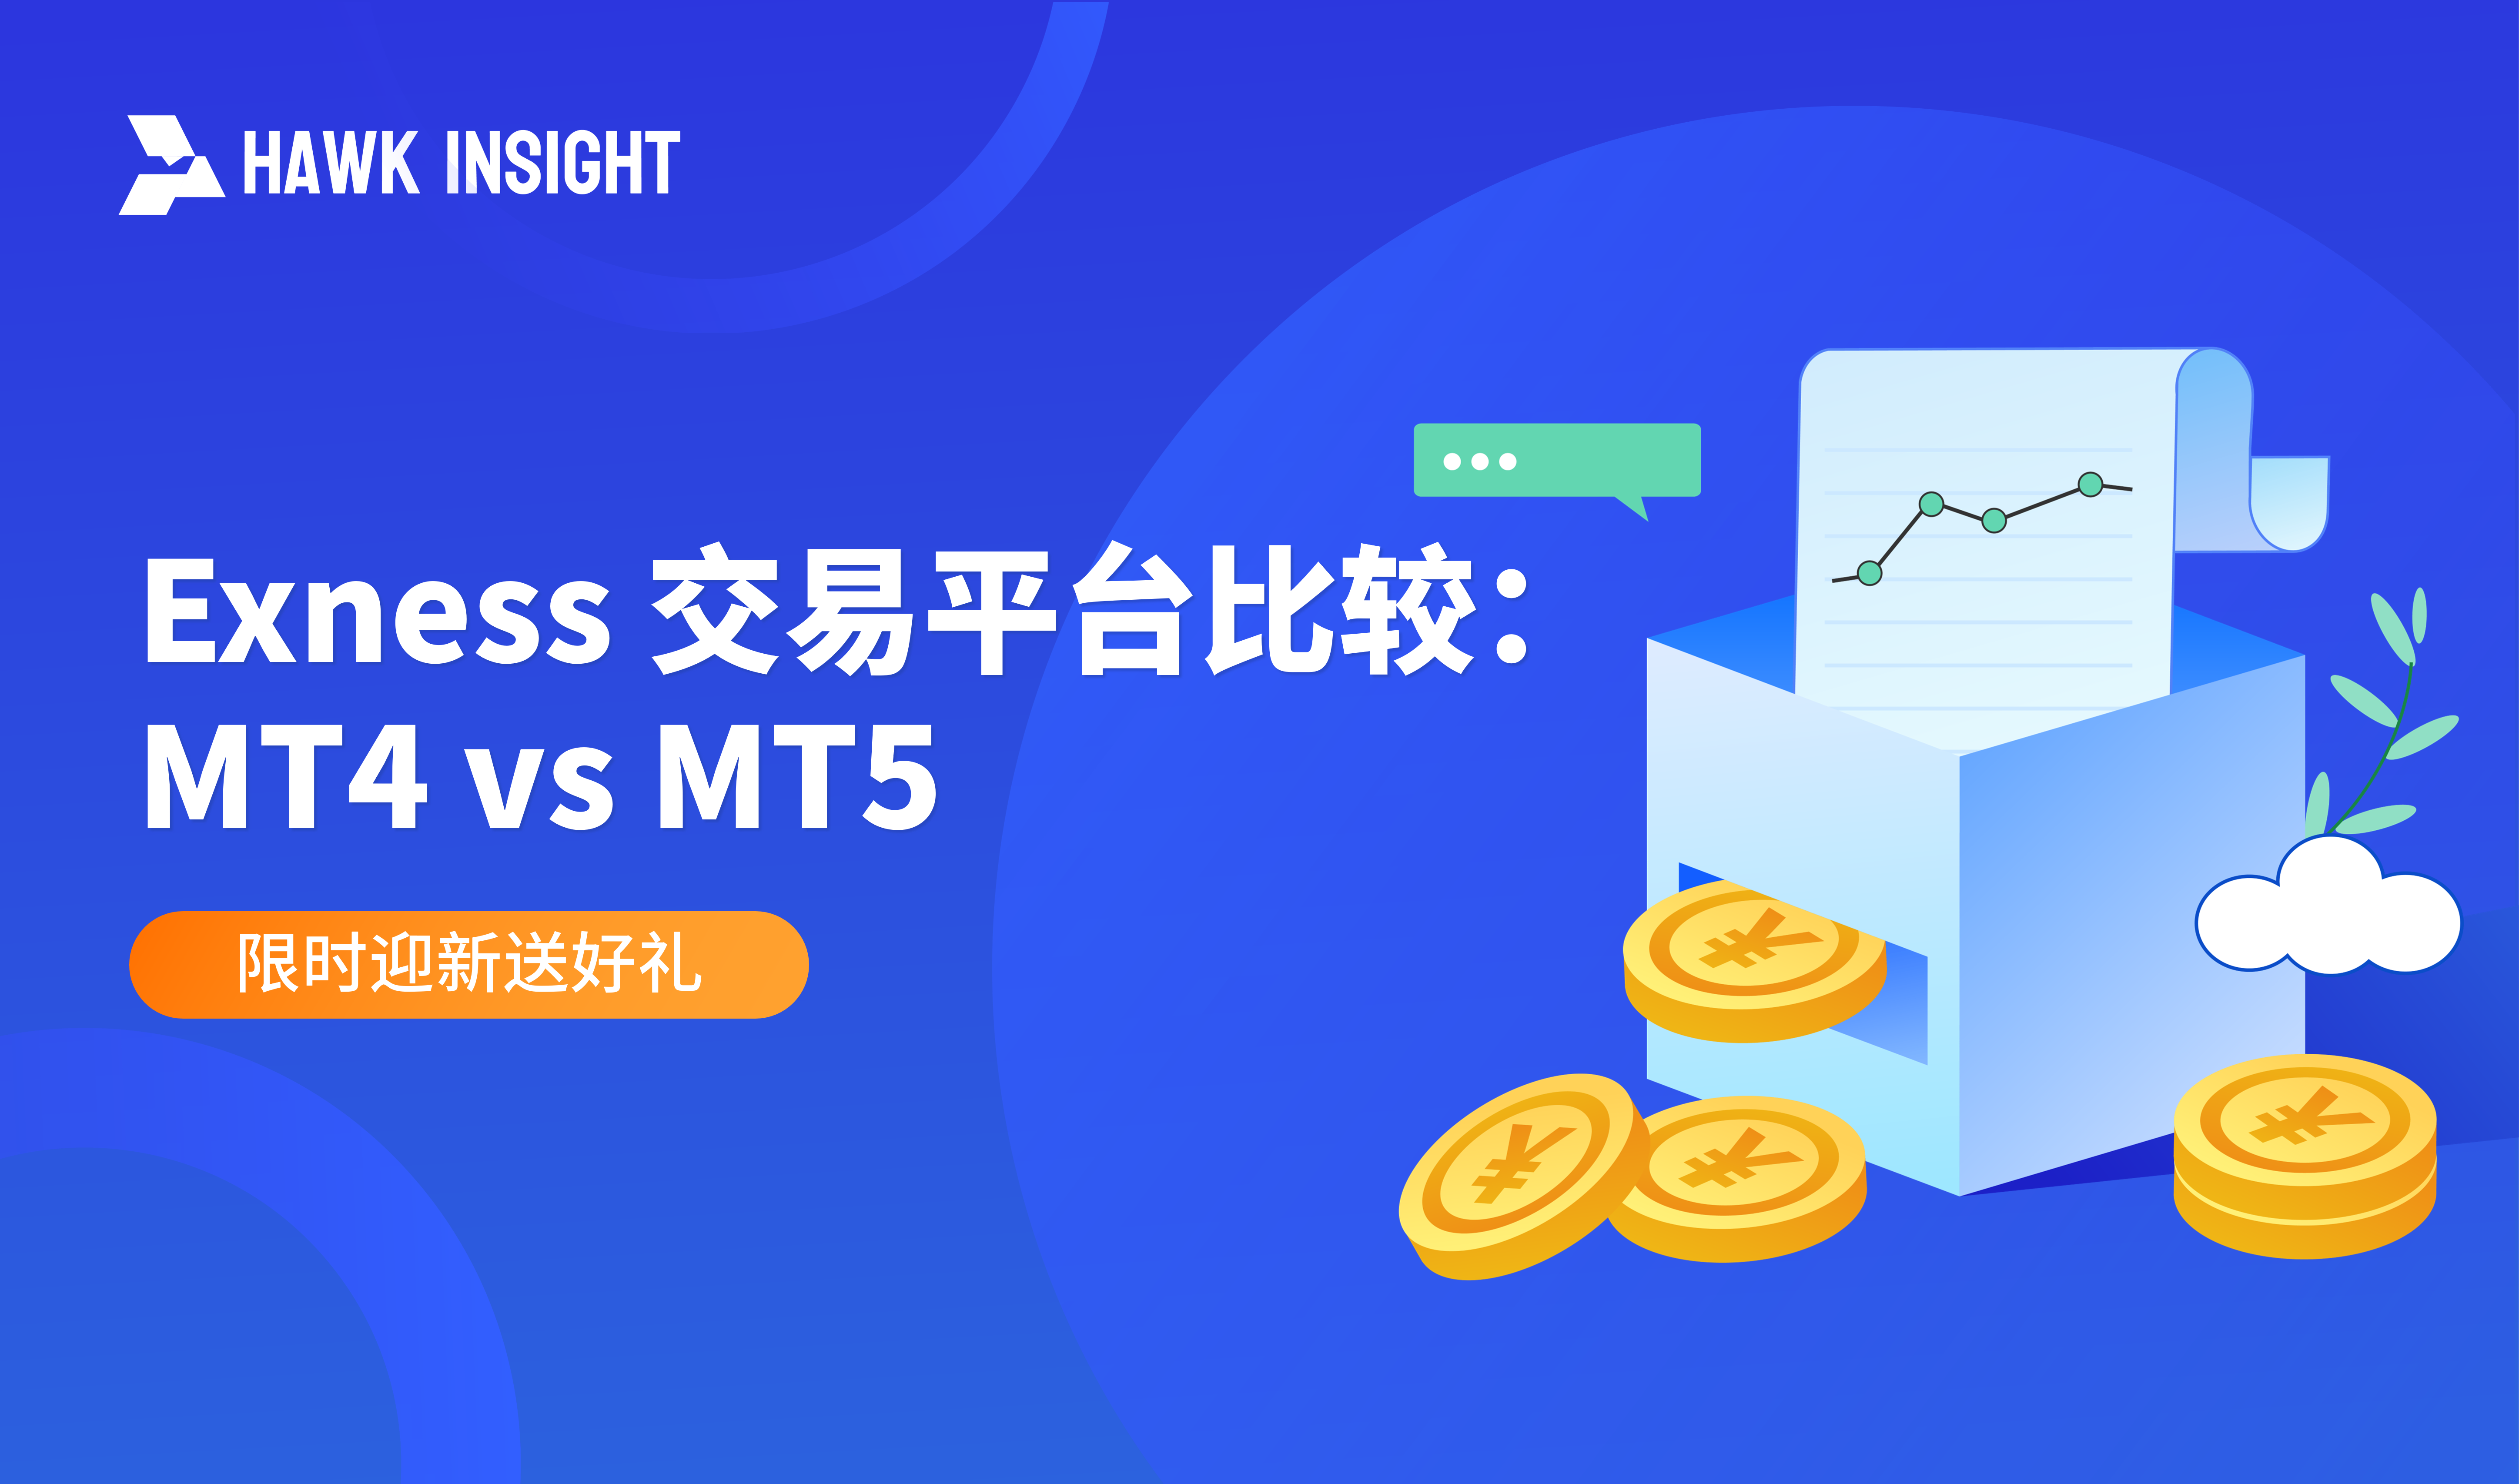 Exness trading platform comparison: MT4 vs MT5